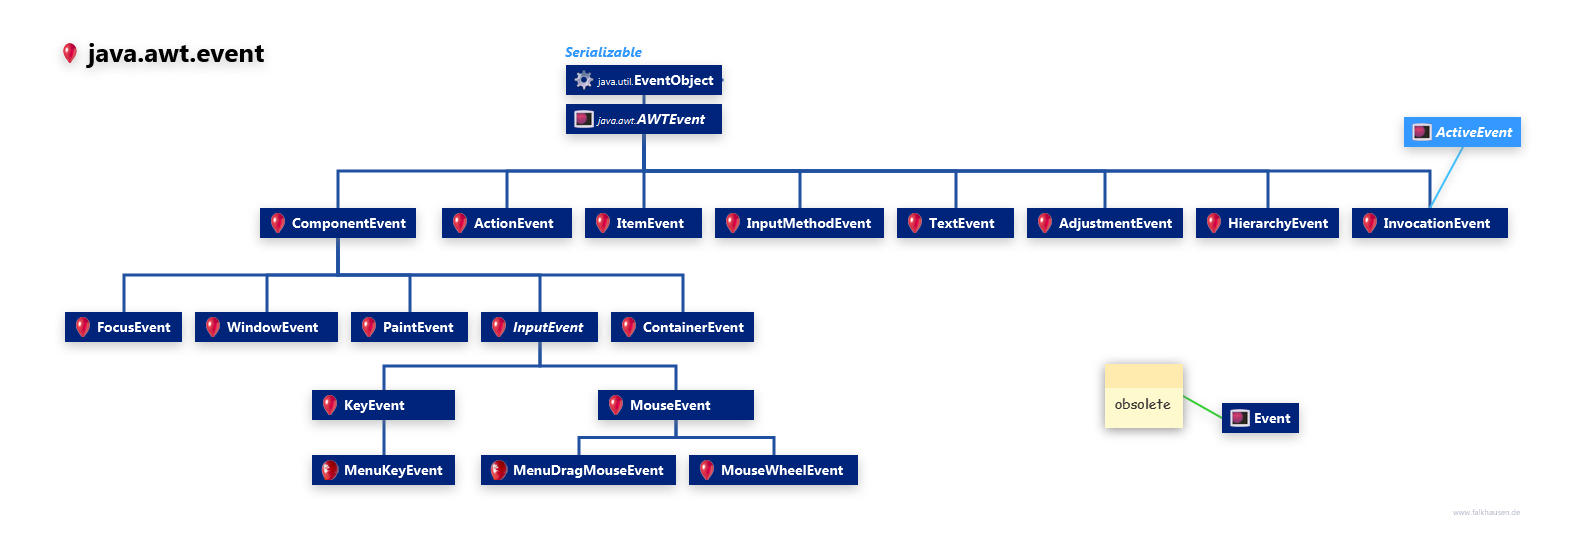 java.awt.event Event Hierarchy class diagram and api documentation for Java 7